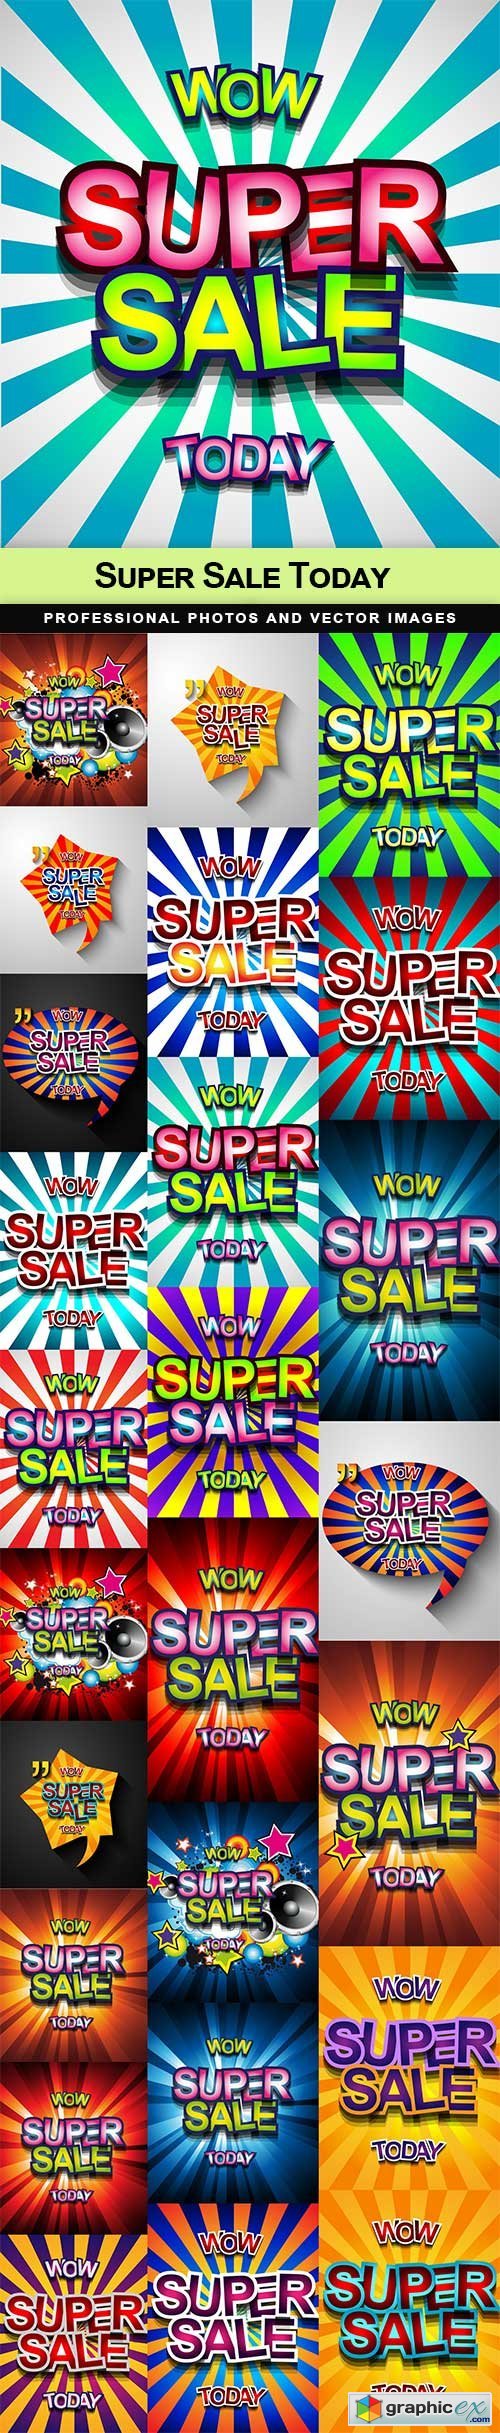 Super Sale Today